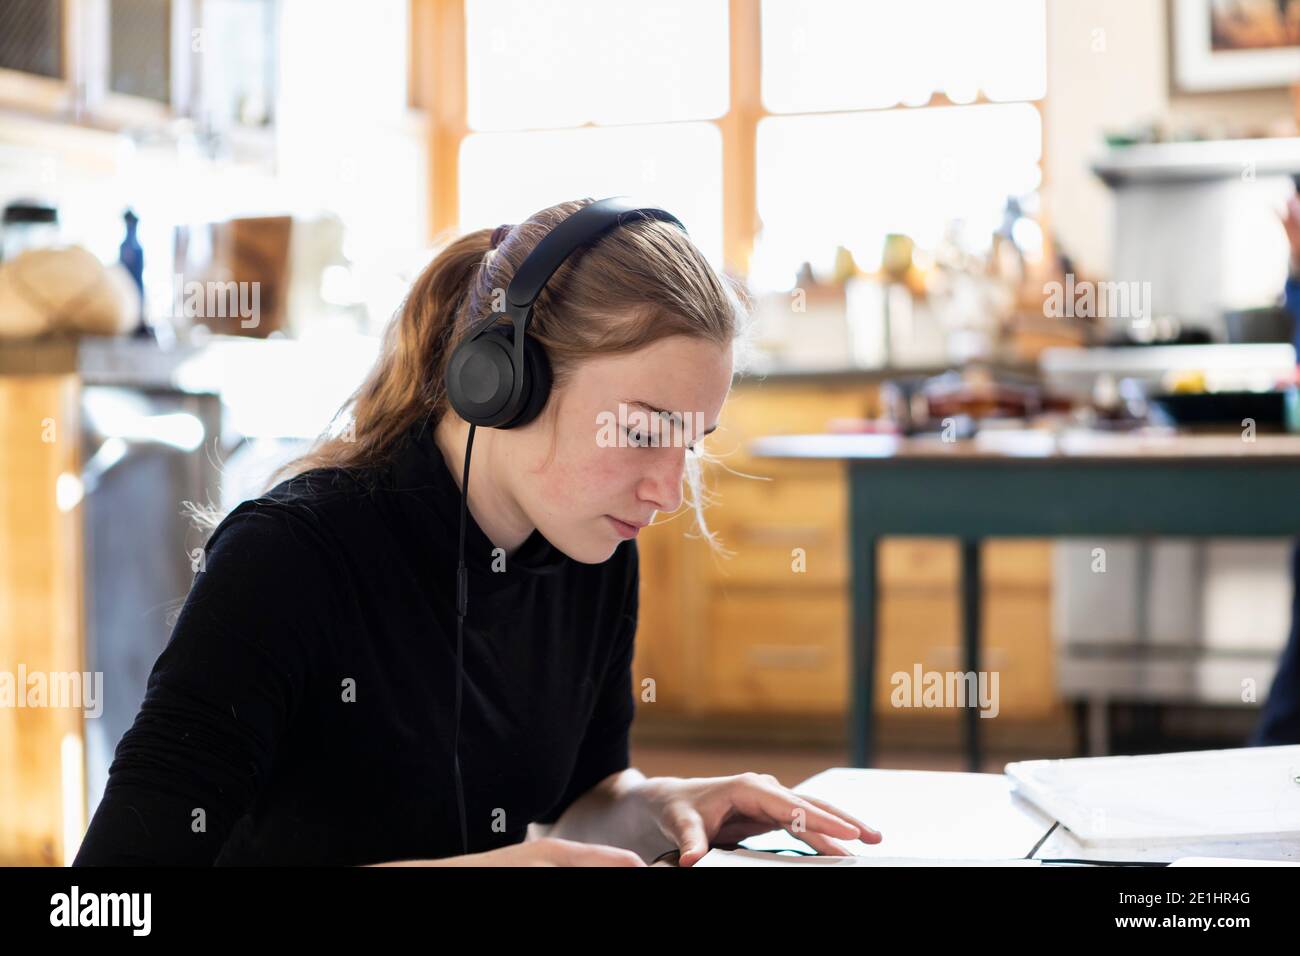 Teenage girl studying, wearing headphones, drawing illustrations, creative, artistic Stock Photo